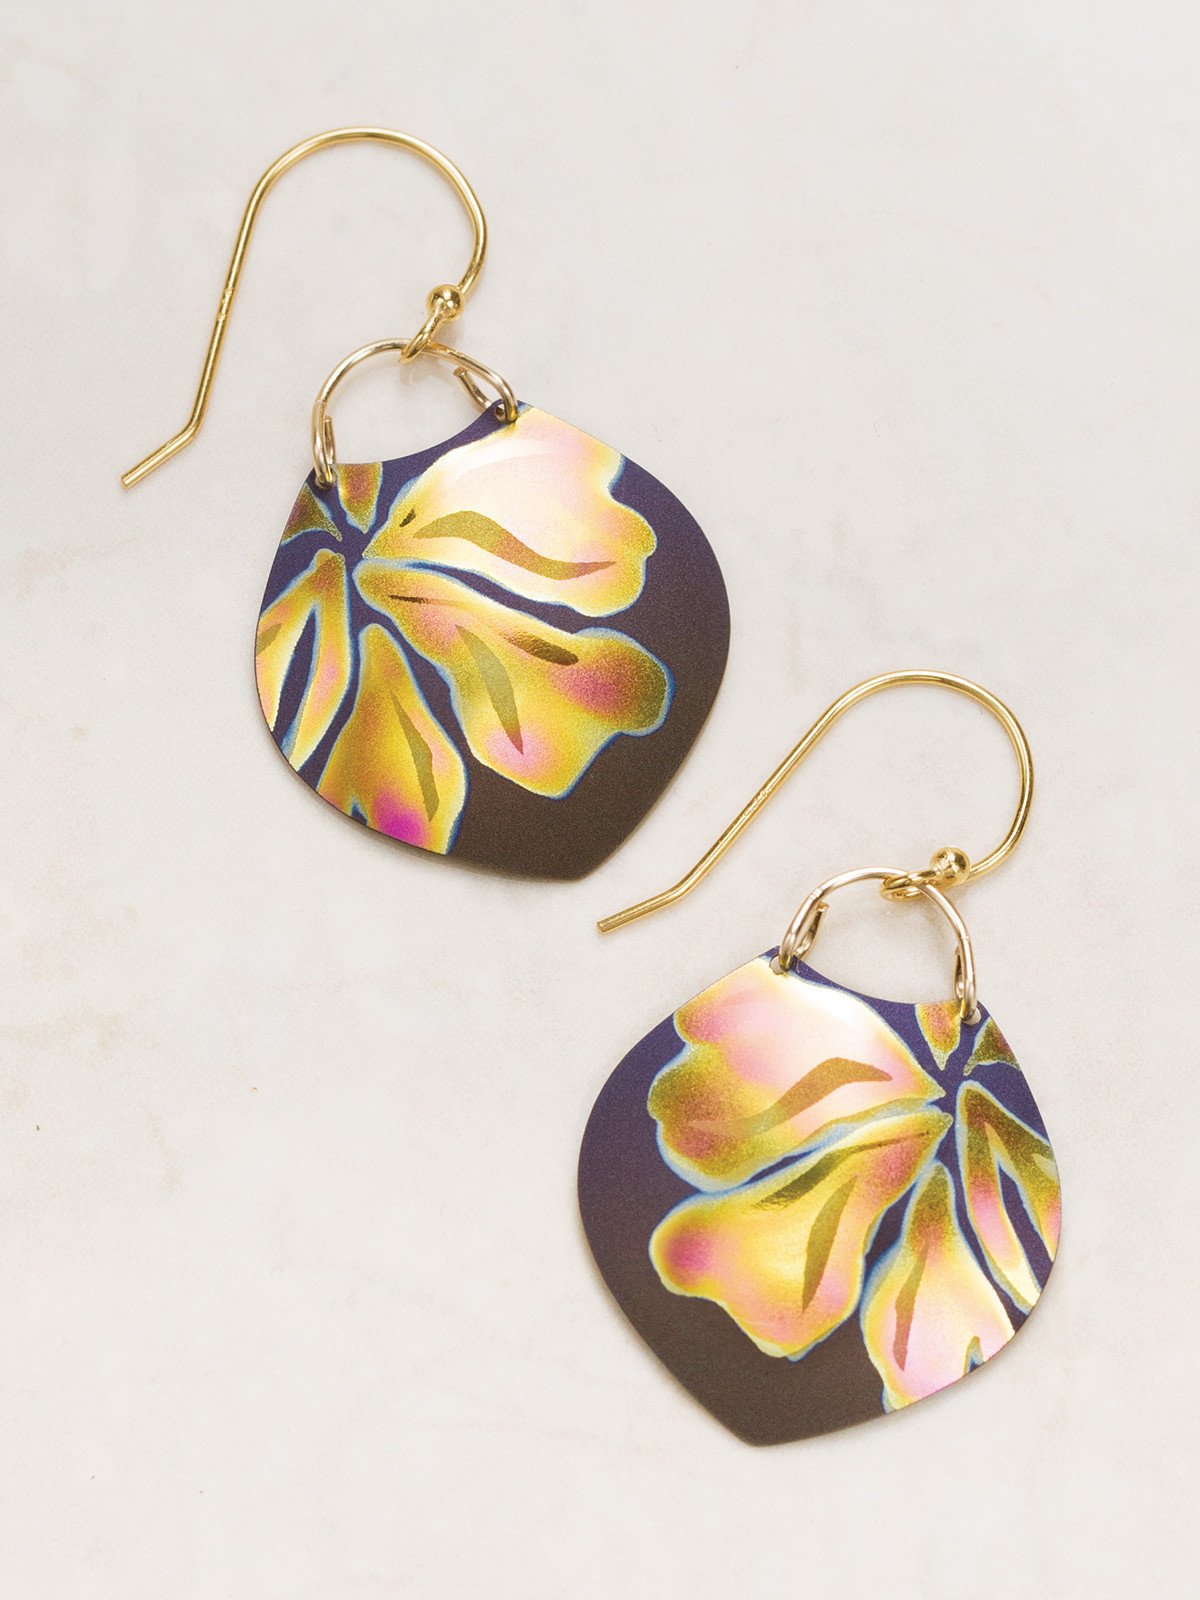 Gardenia brown flower earrings by jewelry designer Holly Yashi